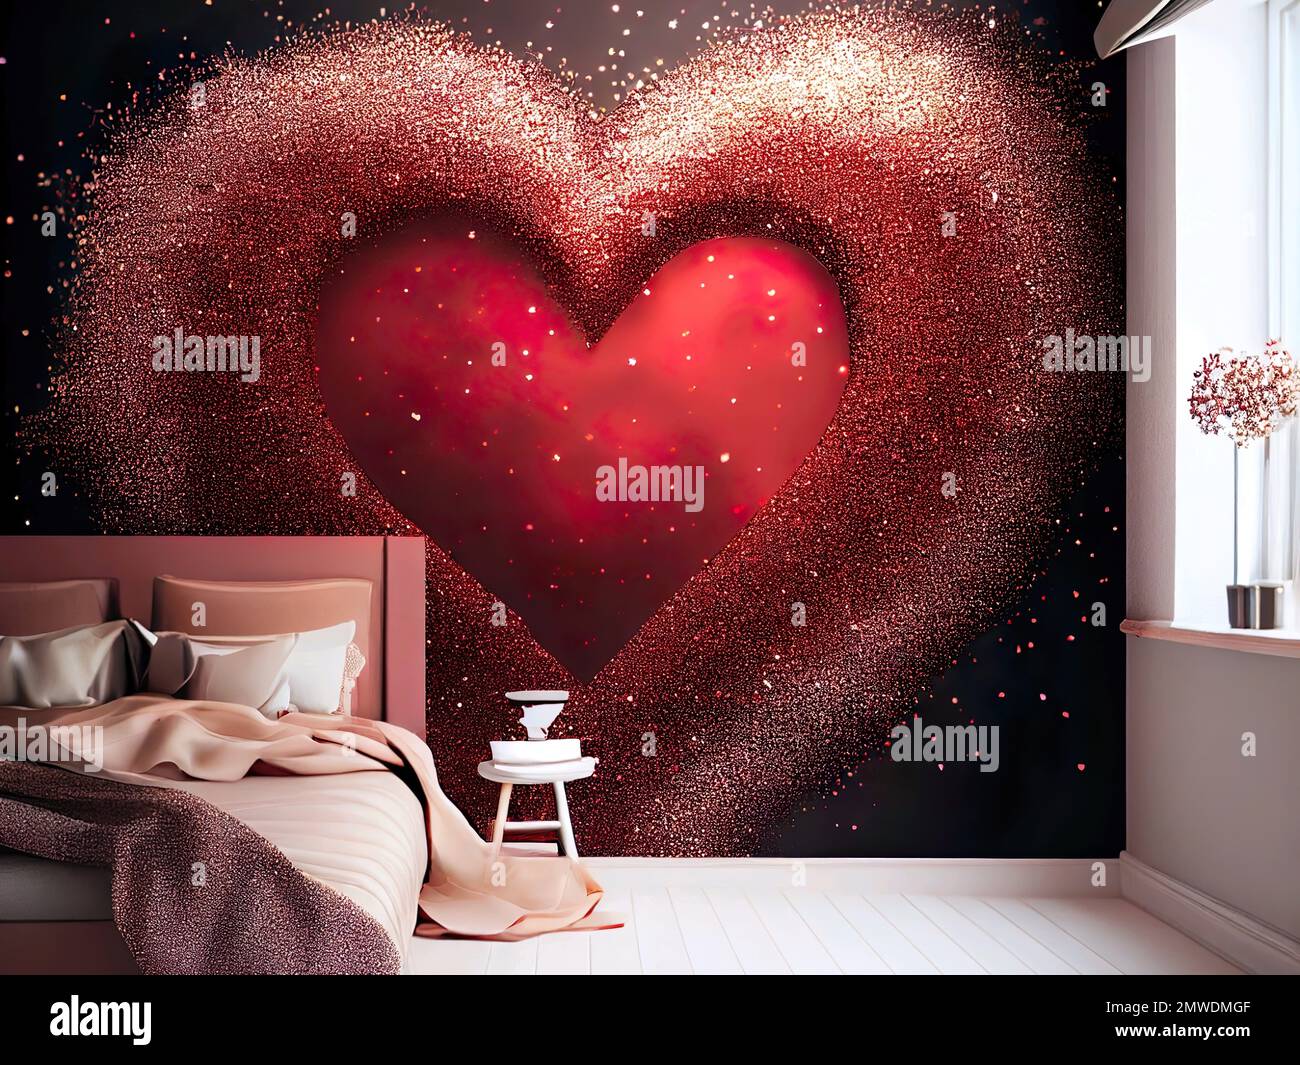 14 Bedroom wallpaper ideas for a romantic touch  COCO LAPINE DESIGNCOCO  LAPINE DESIGN